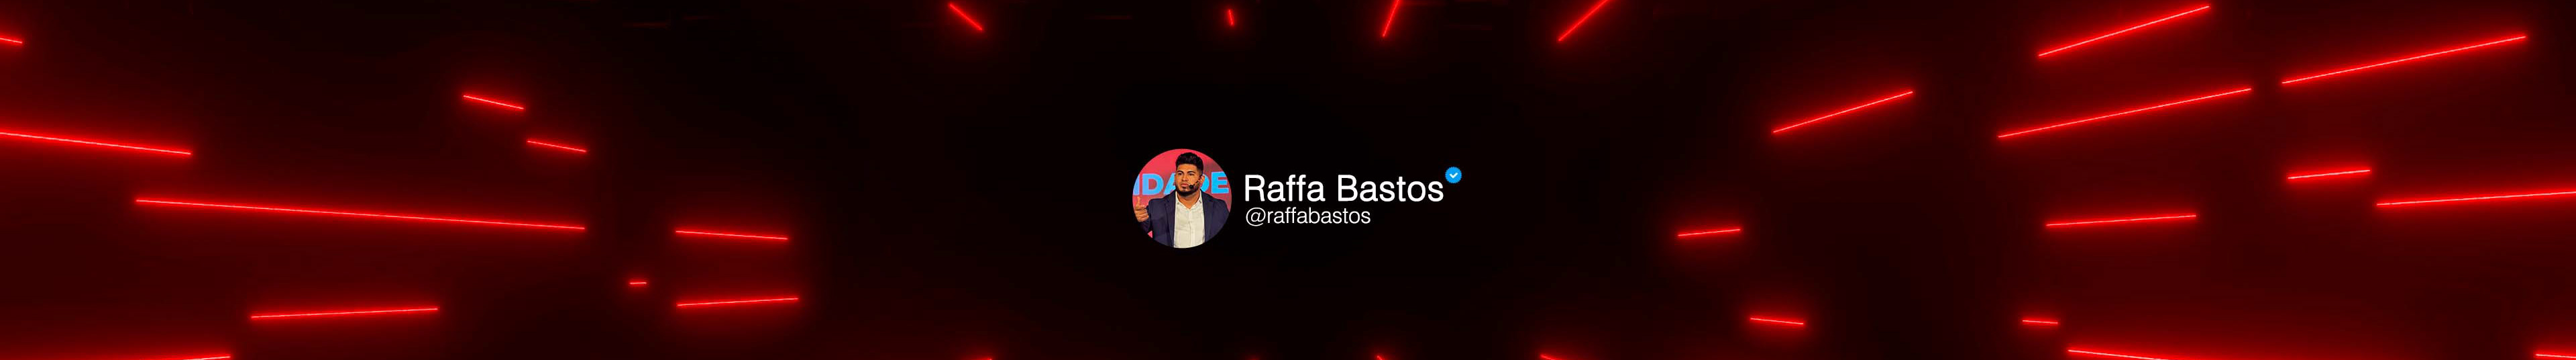 Bannière de profil de Raffa Bastos